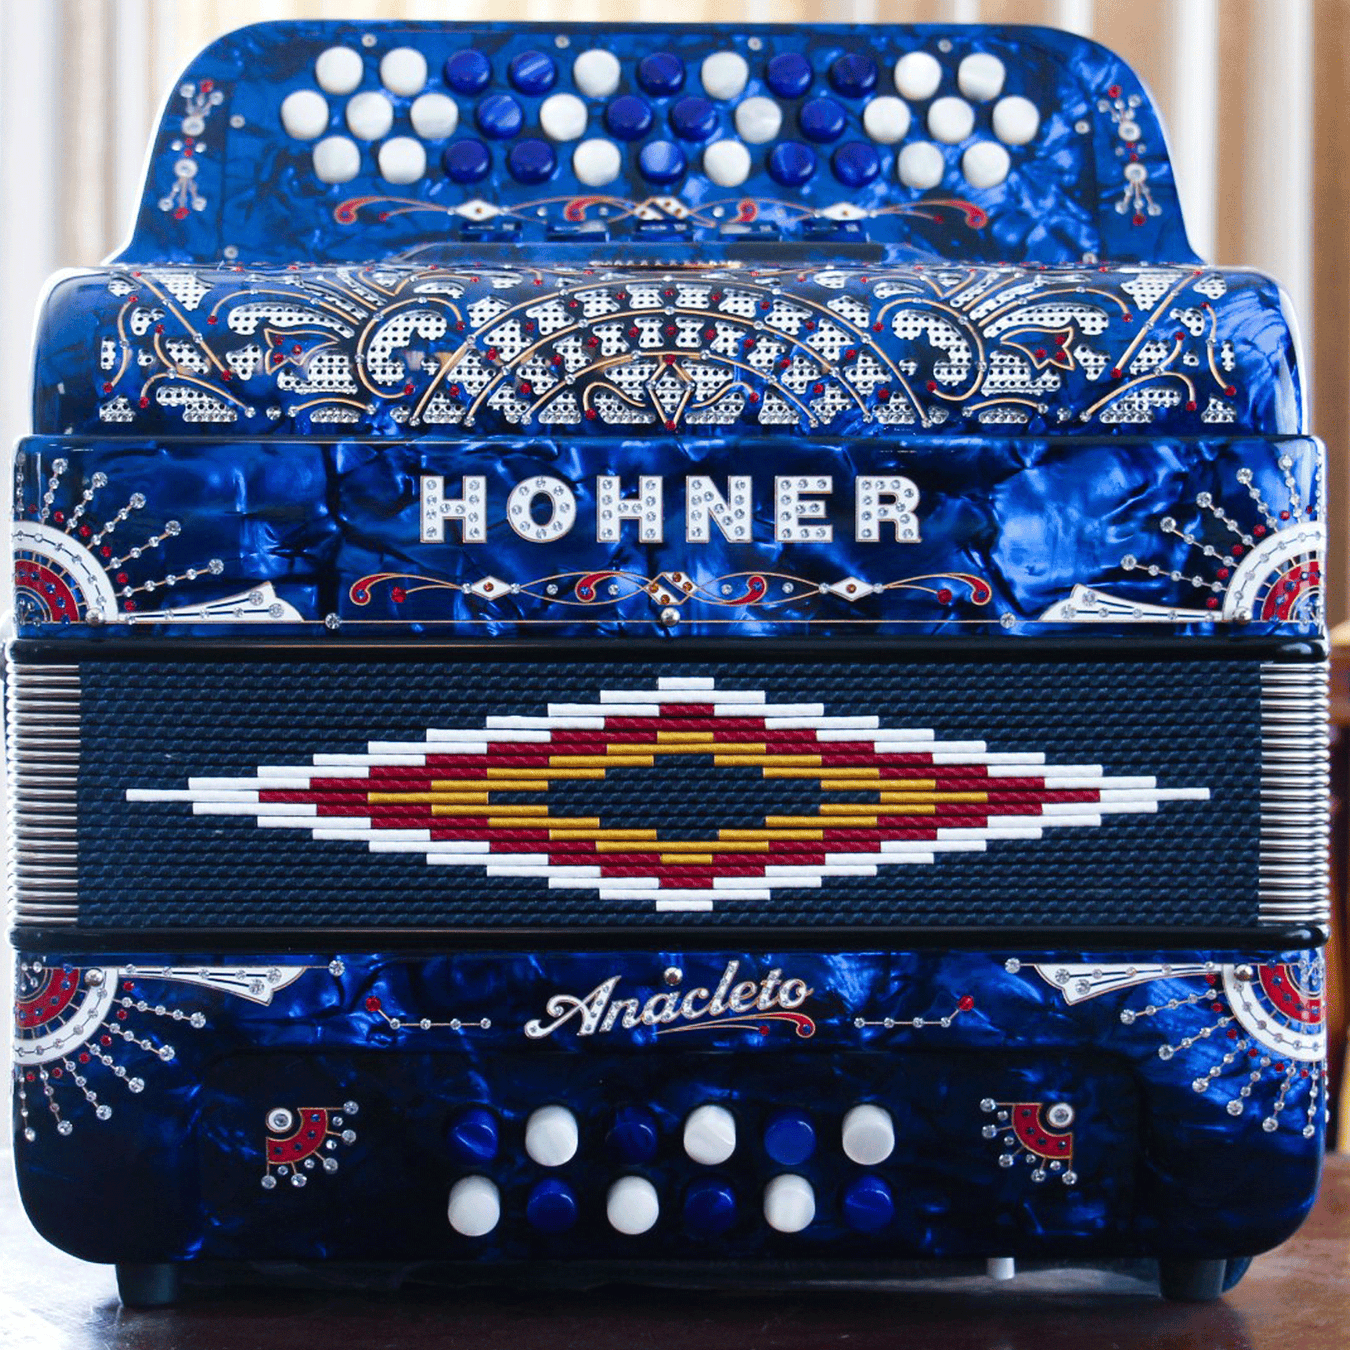 Hohner Blue Anacleto Accordion